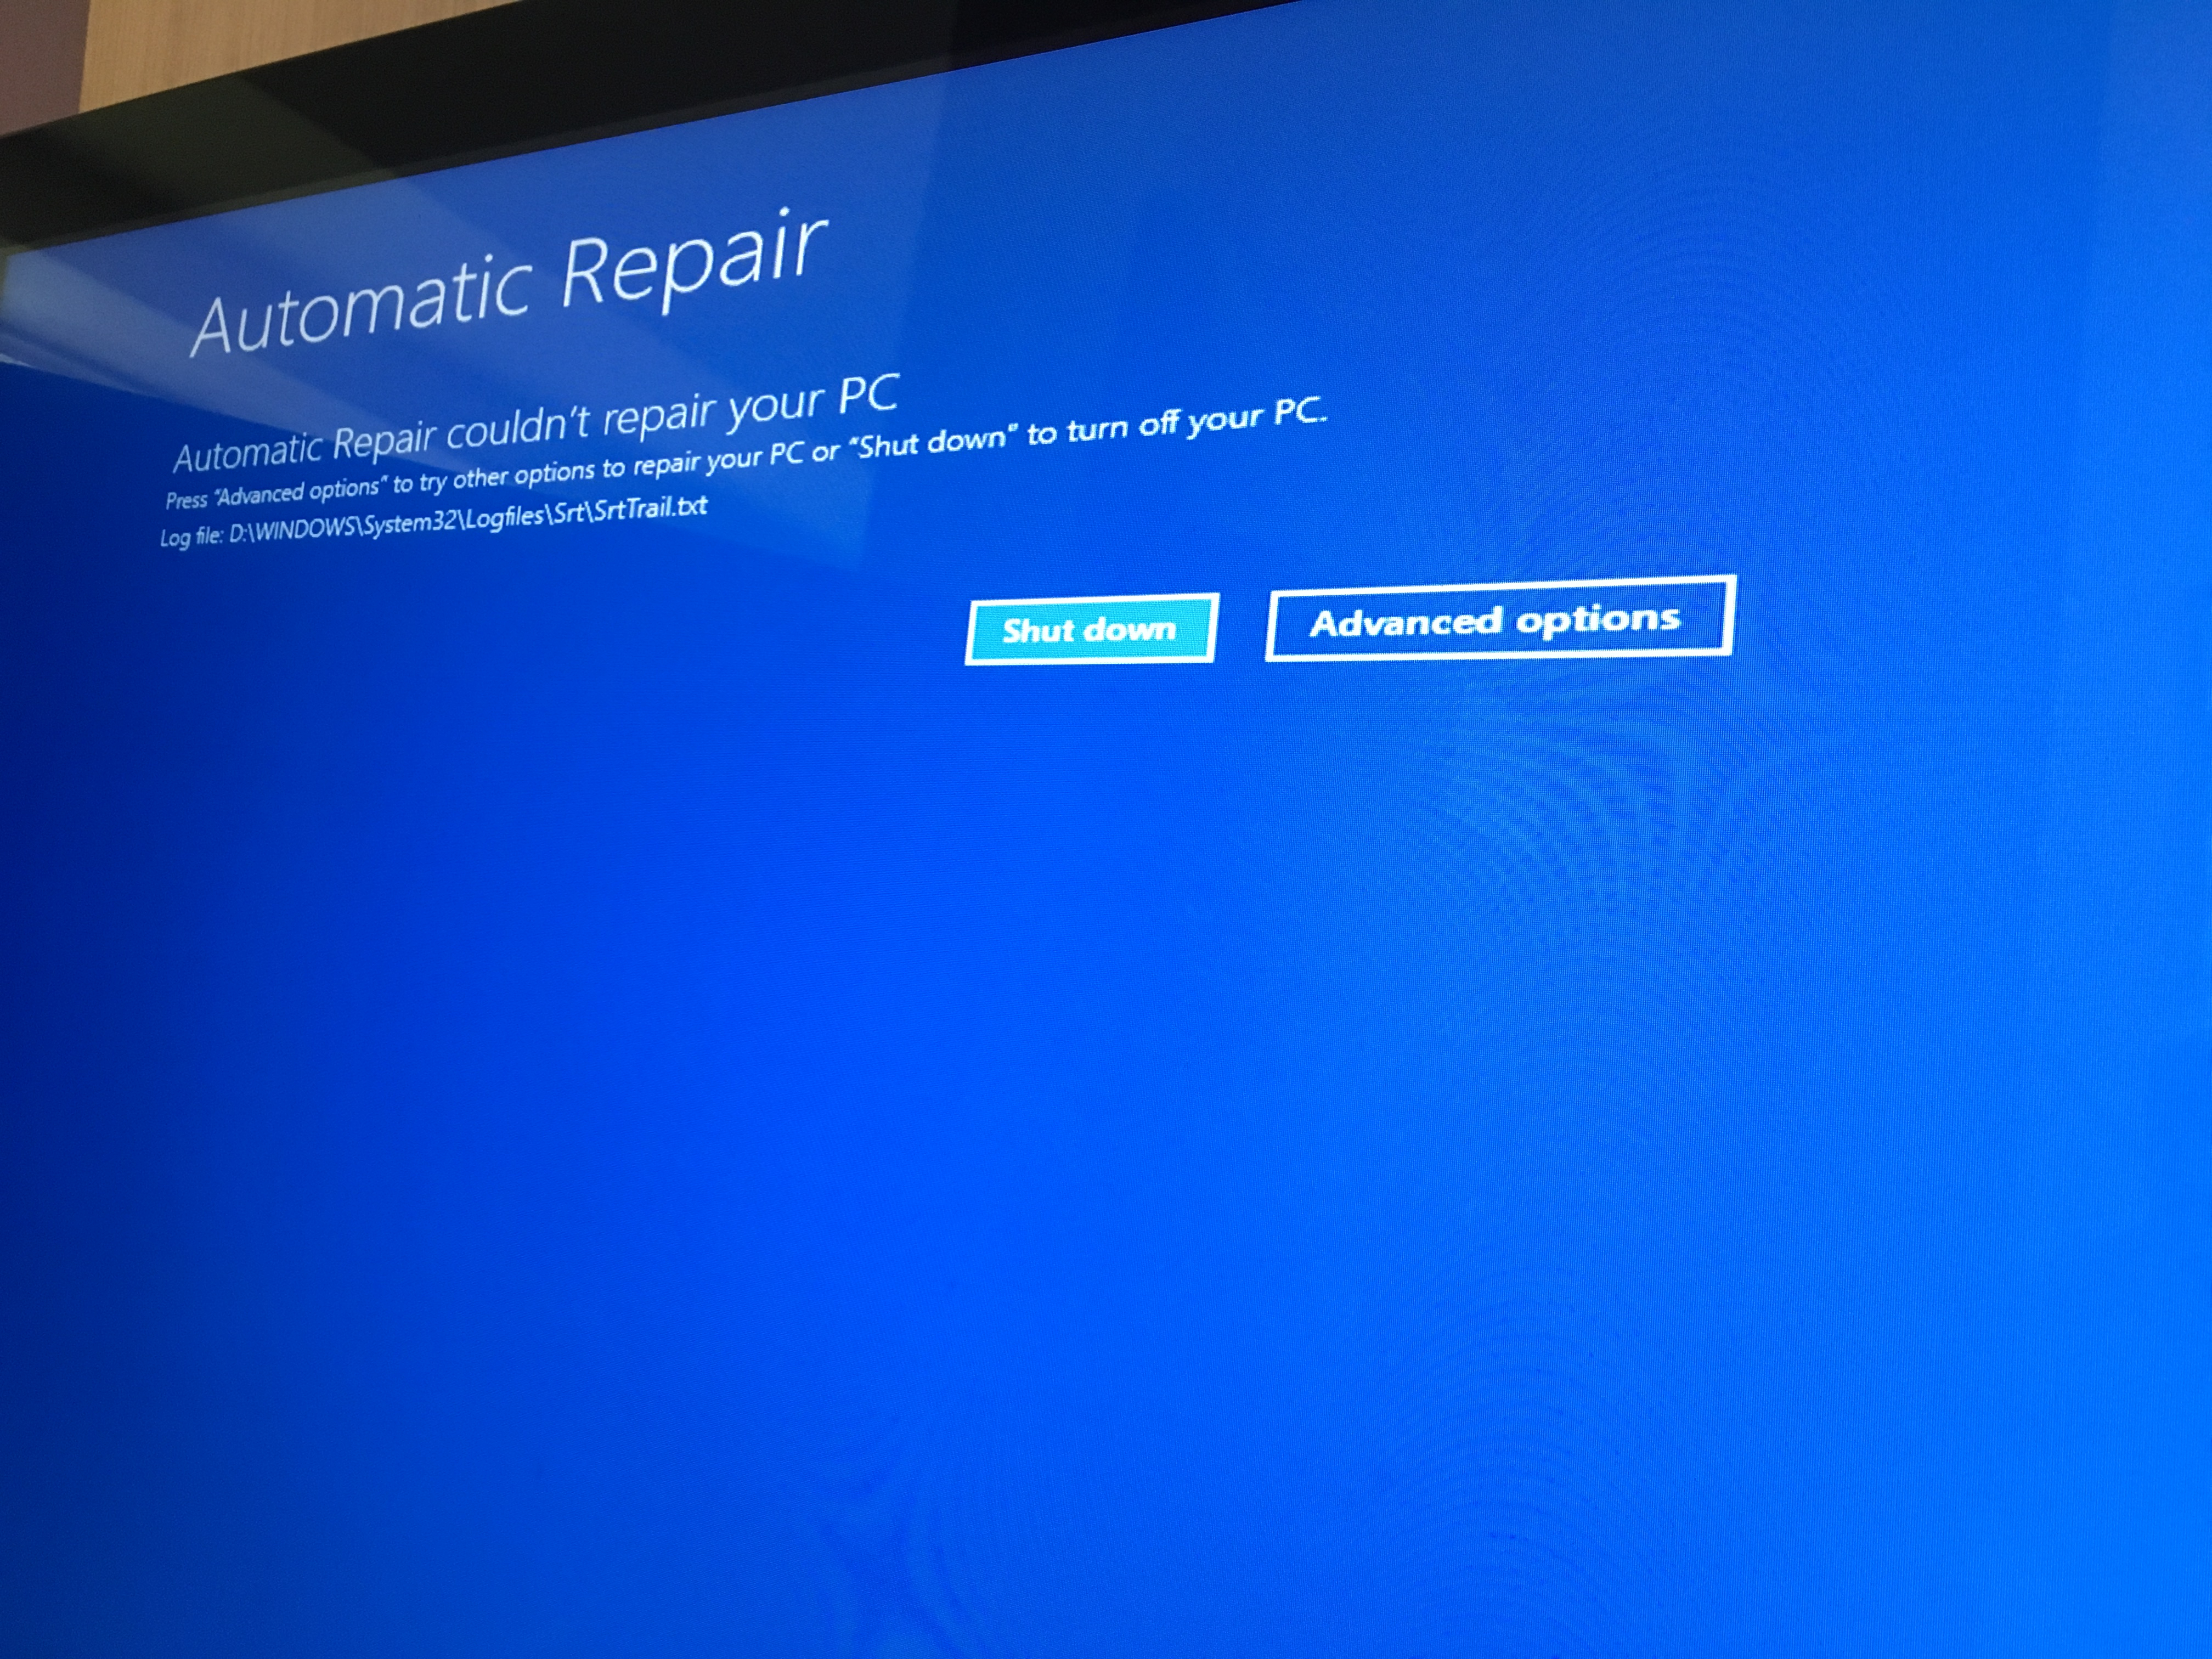 How to fix automatic repair loop in Windows 10